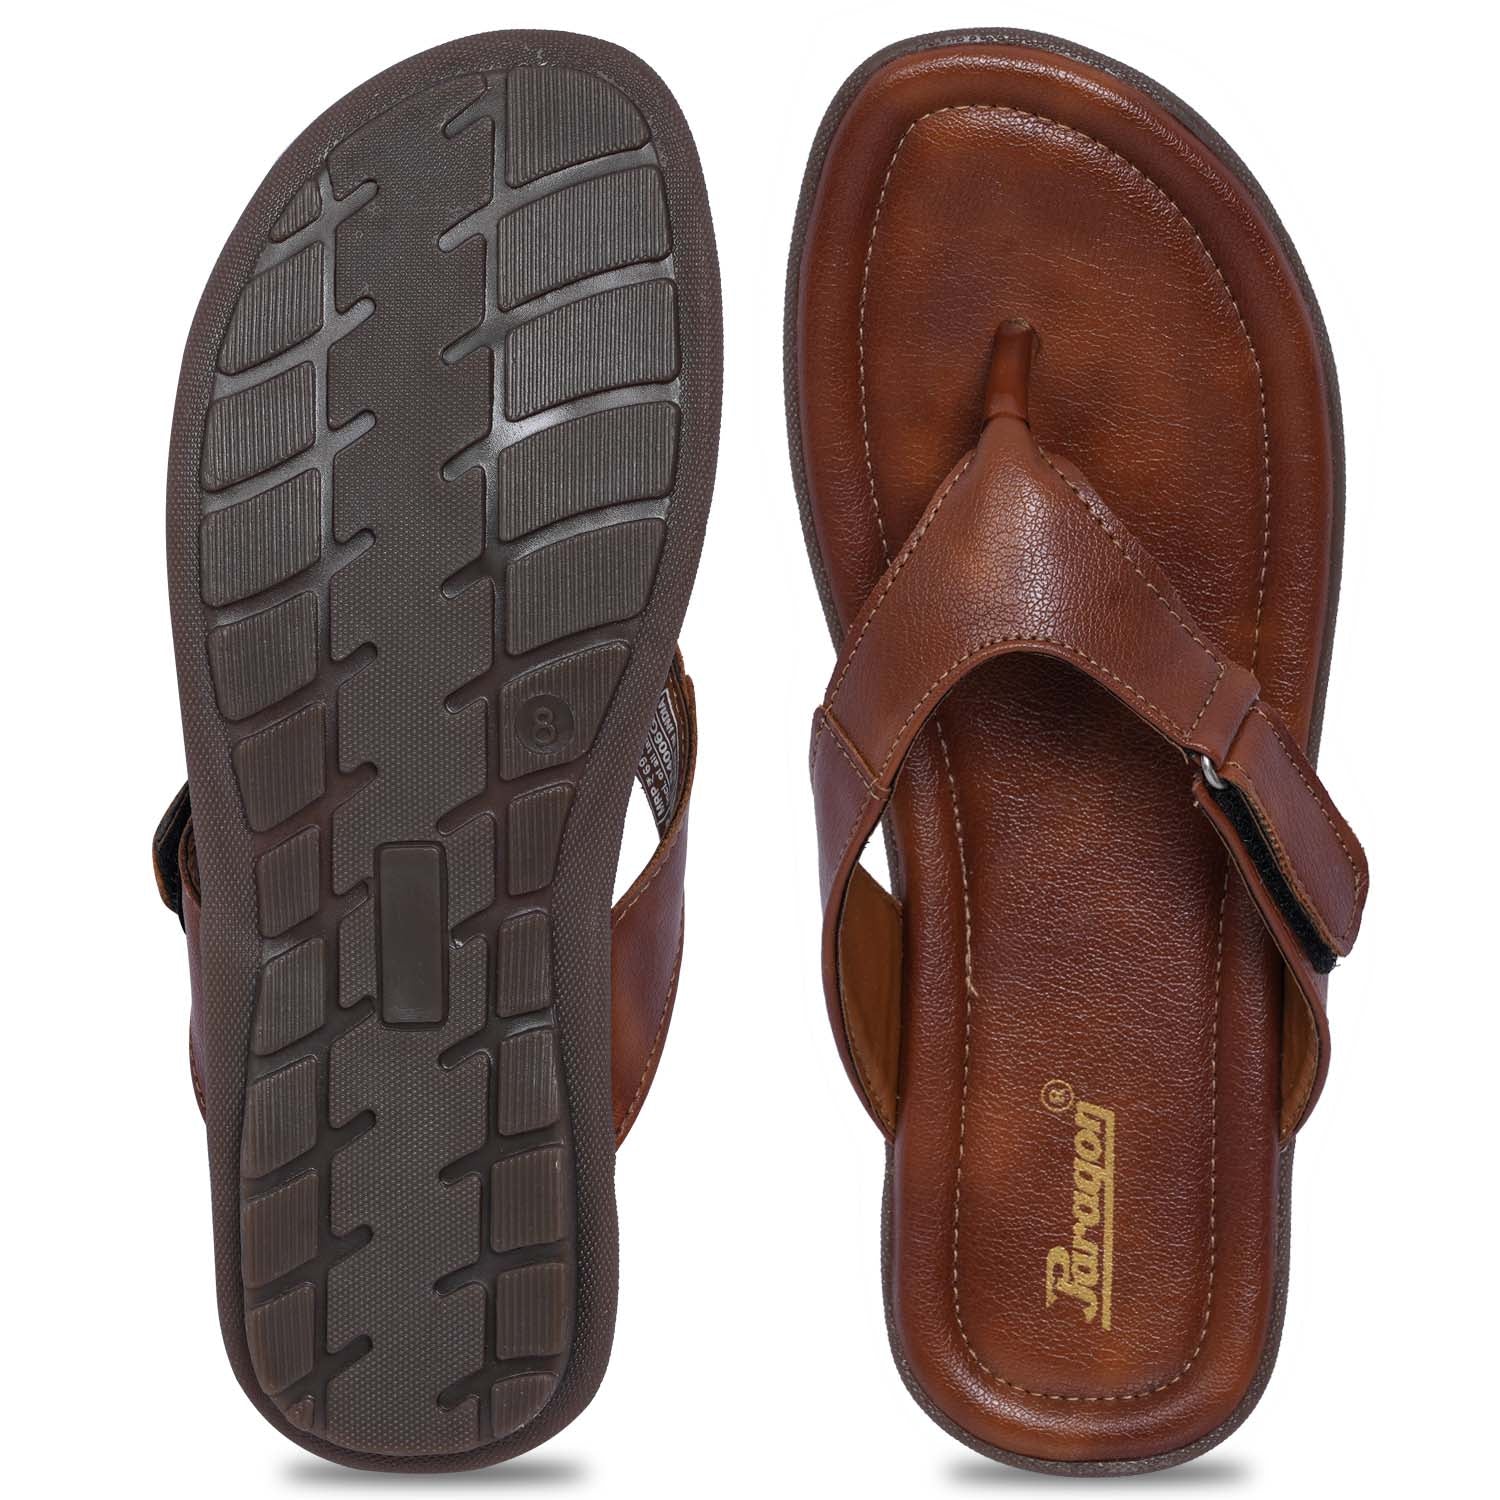 Paragon Men Sandal, Model Name/Number: 500, Size: 6to10 at Rs 339/pair in  Vasai